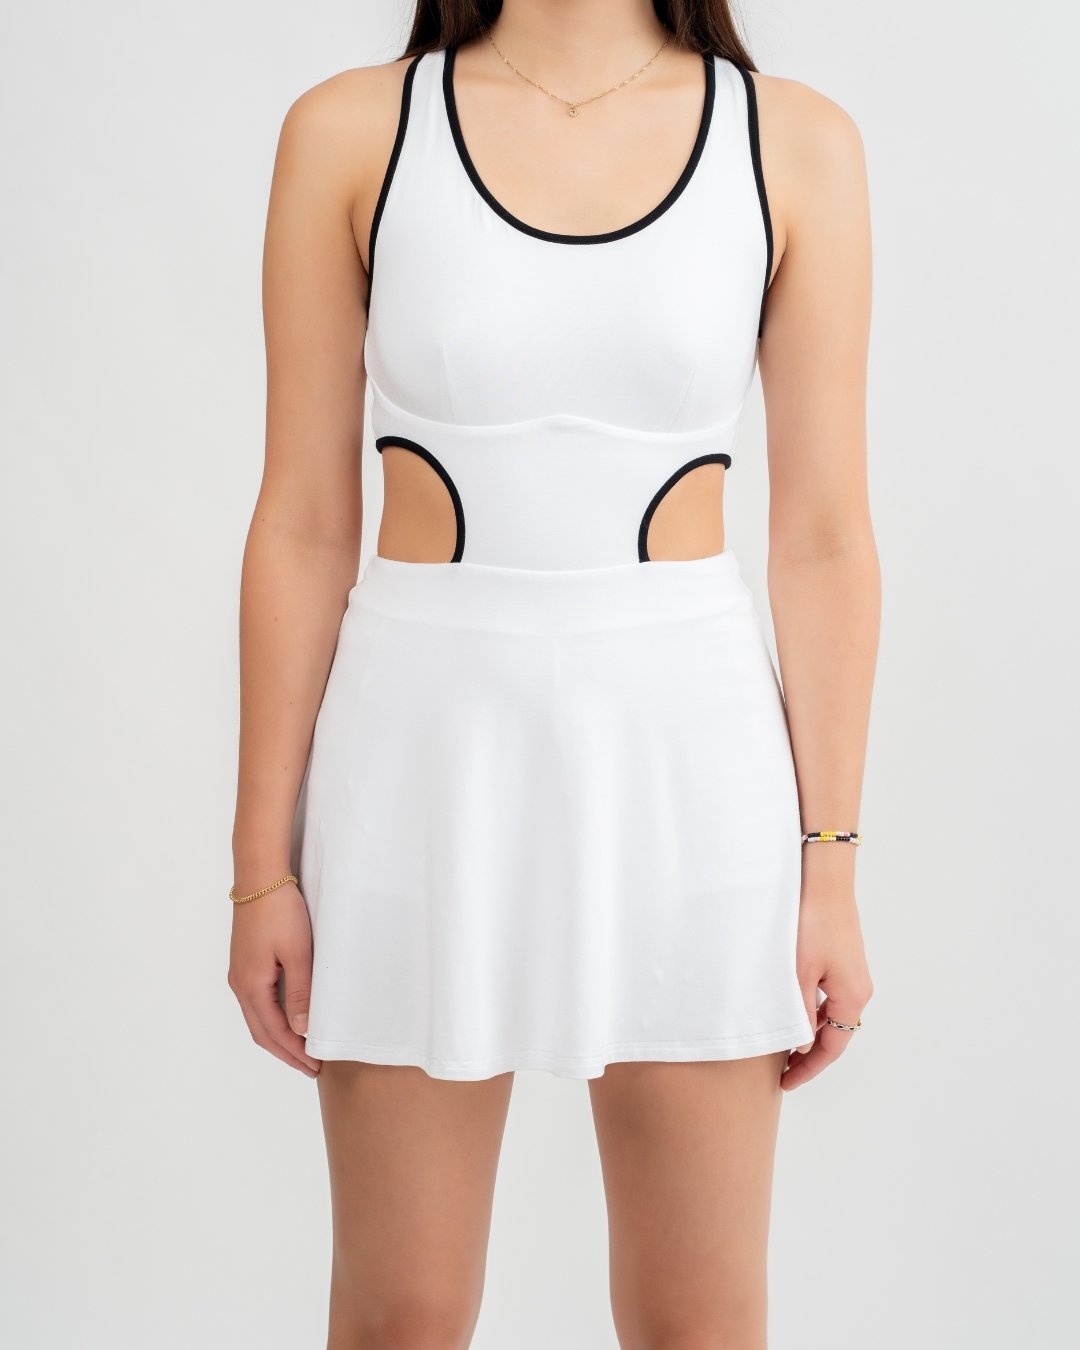 Prosperous Tennis Dress - White - JusRédorDress